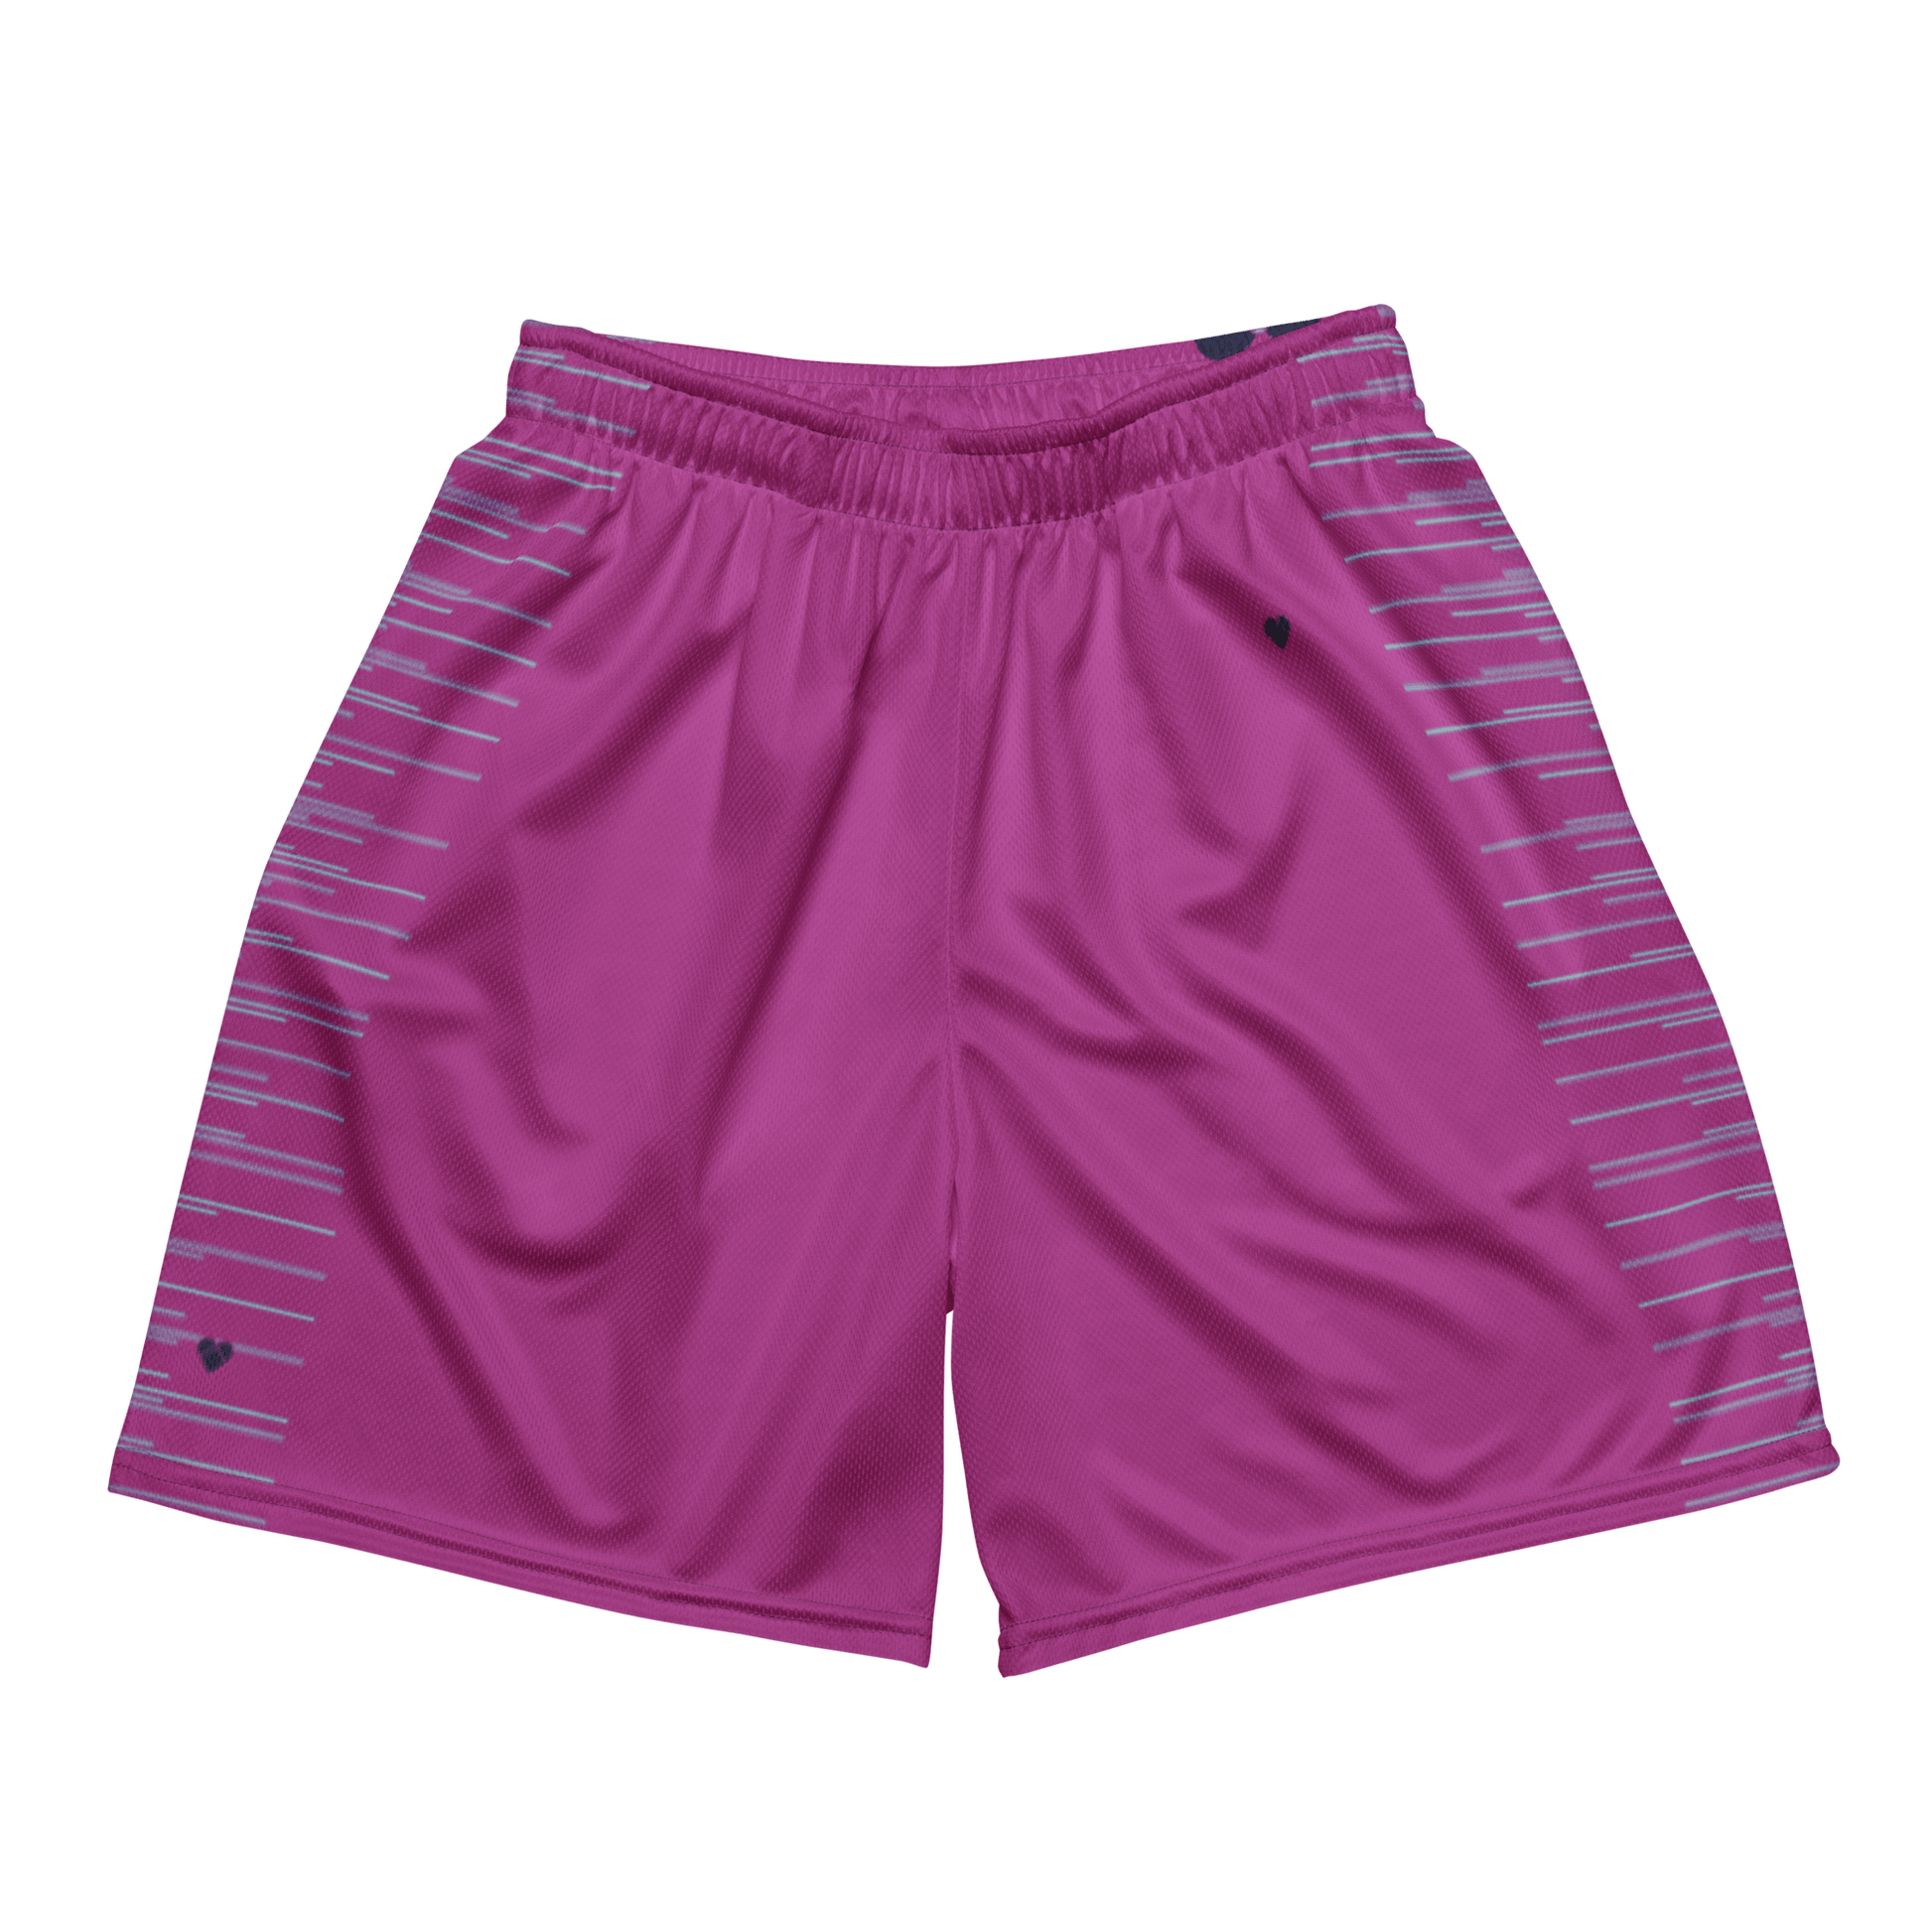 Fucsia Pink Dual Mesh Shorts by CRiZ AMOR, Genderless Sportswear